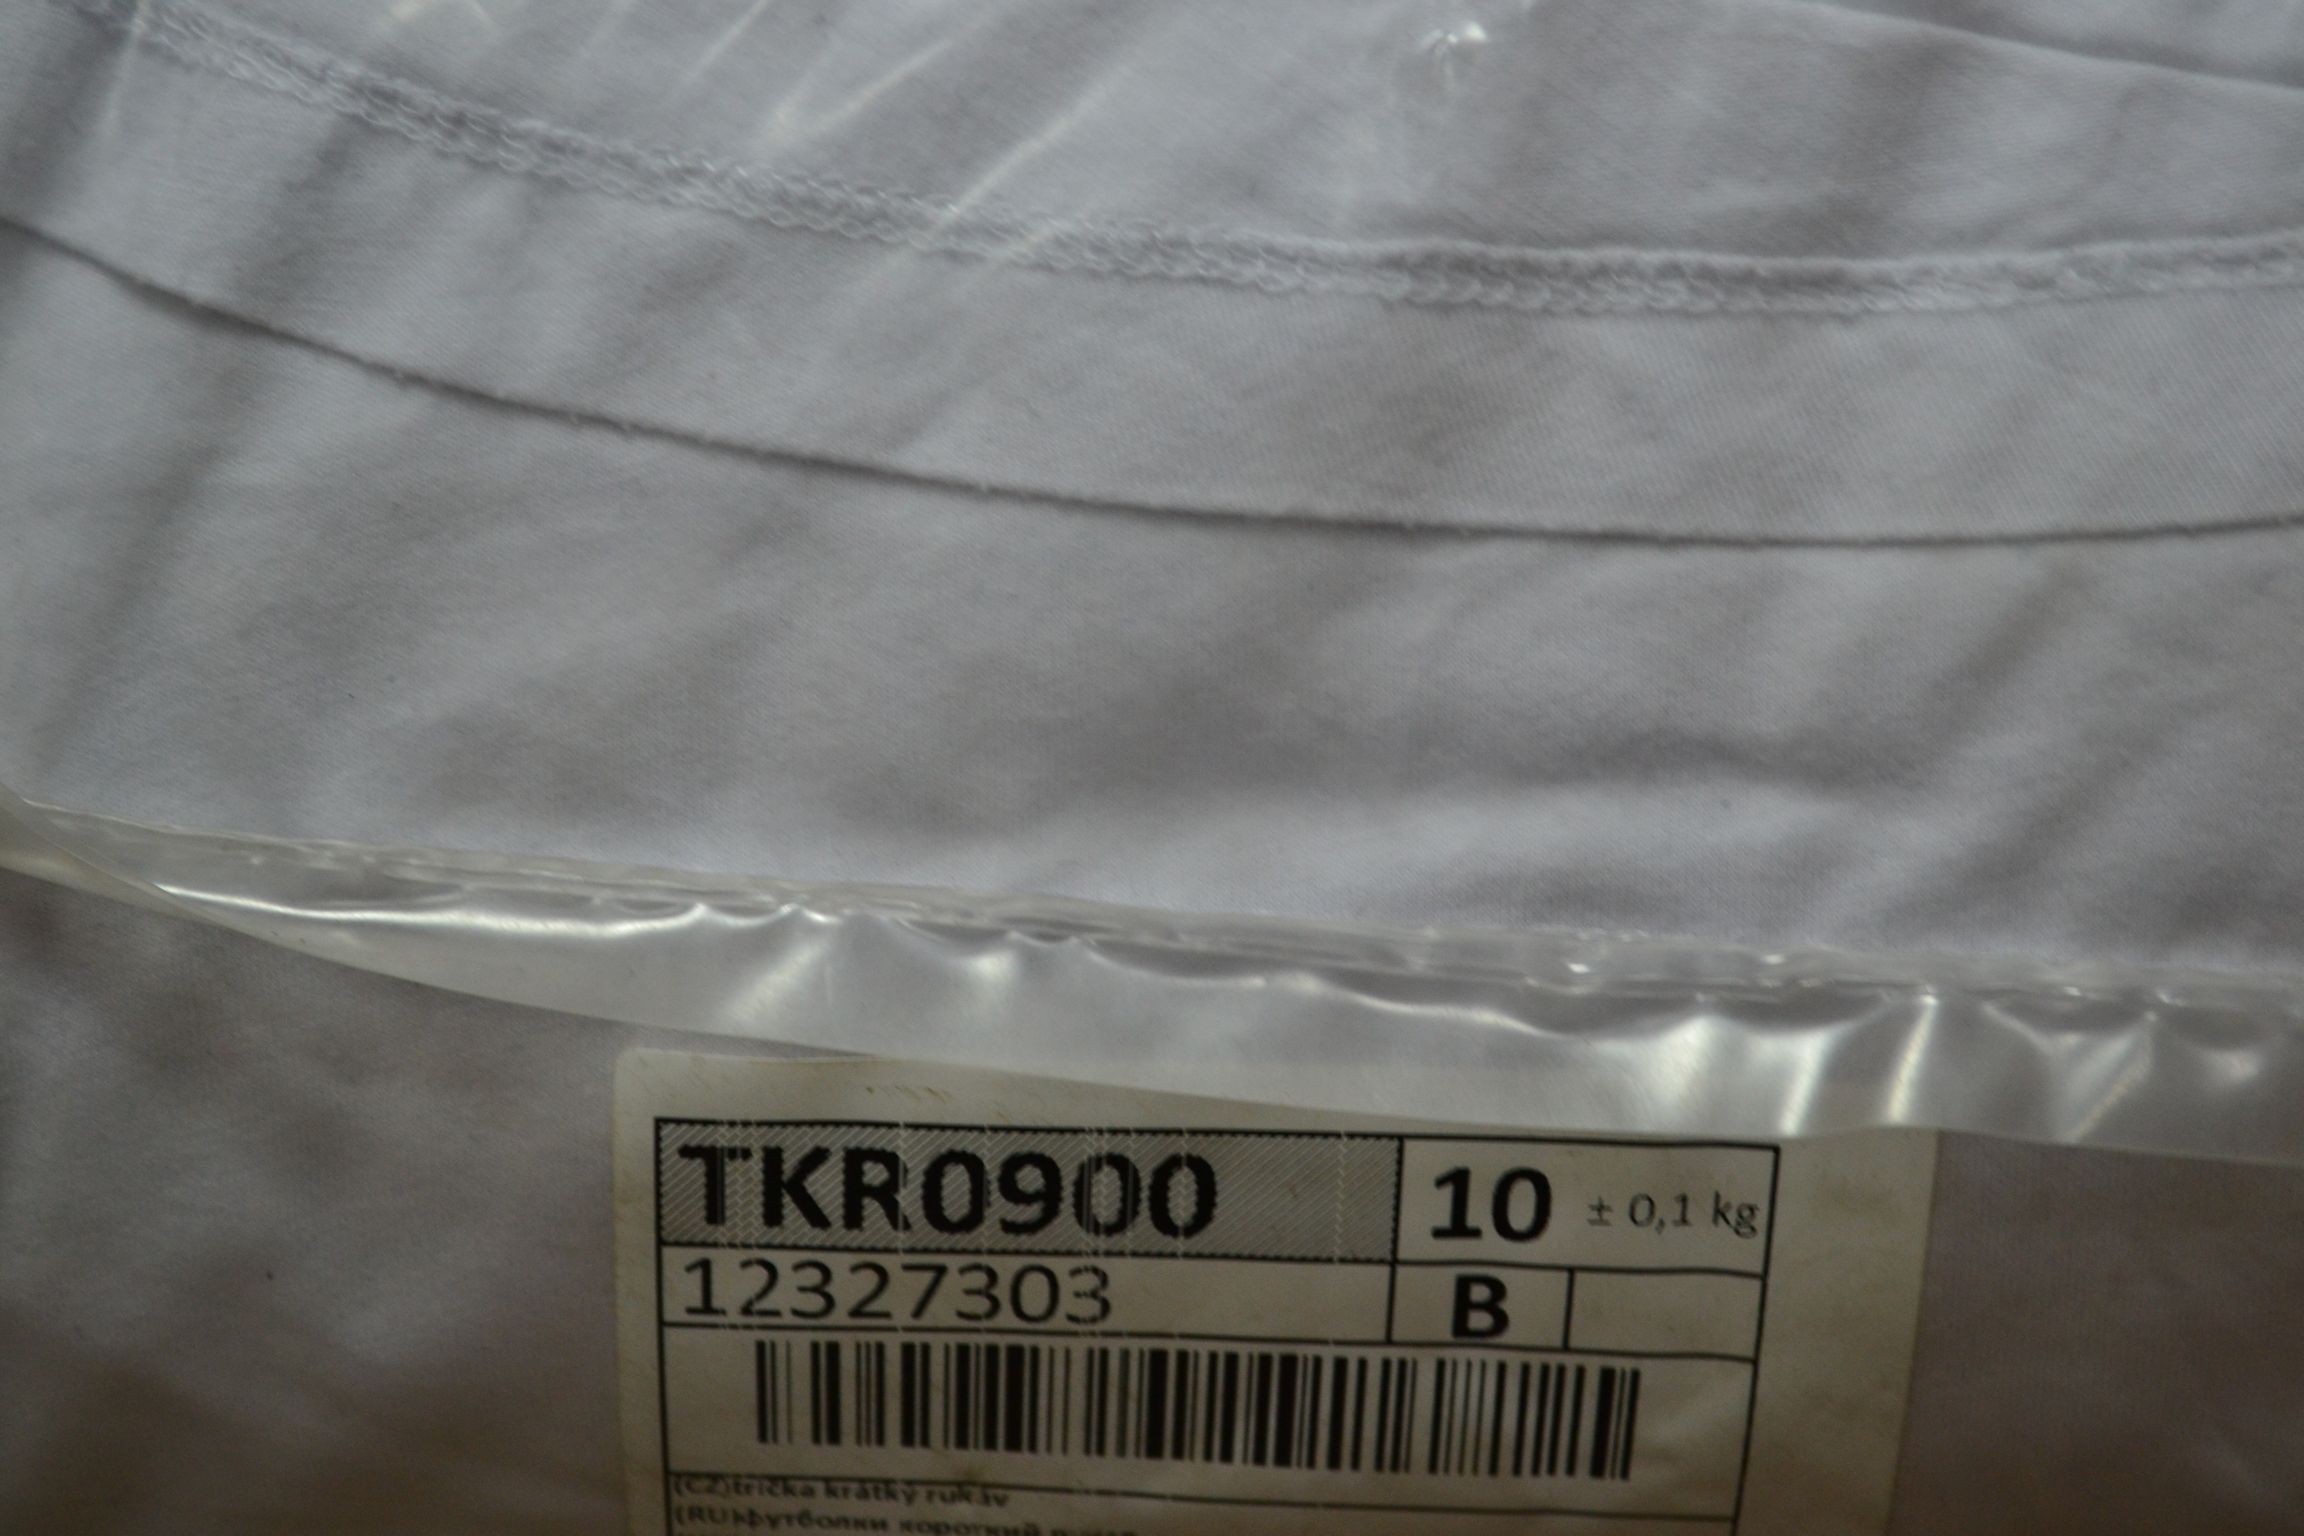 TKR0900 Майки с коротким рукавом; код мешка 12327303